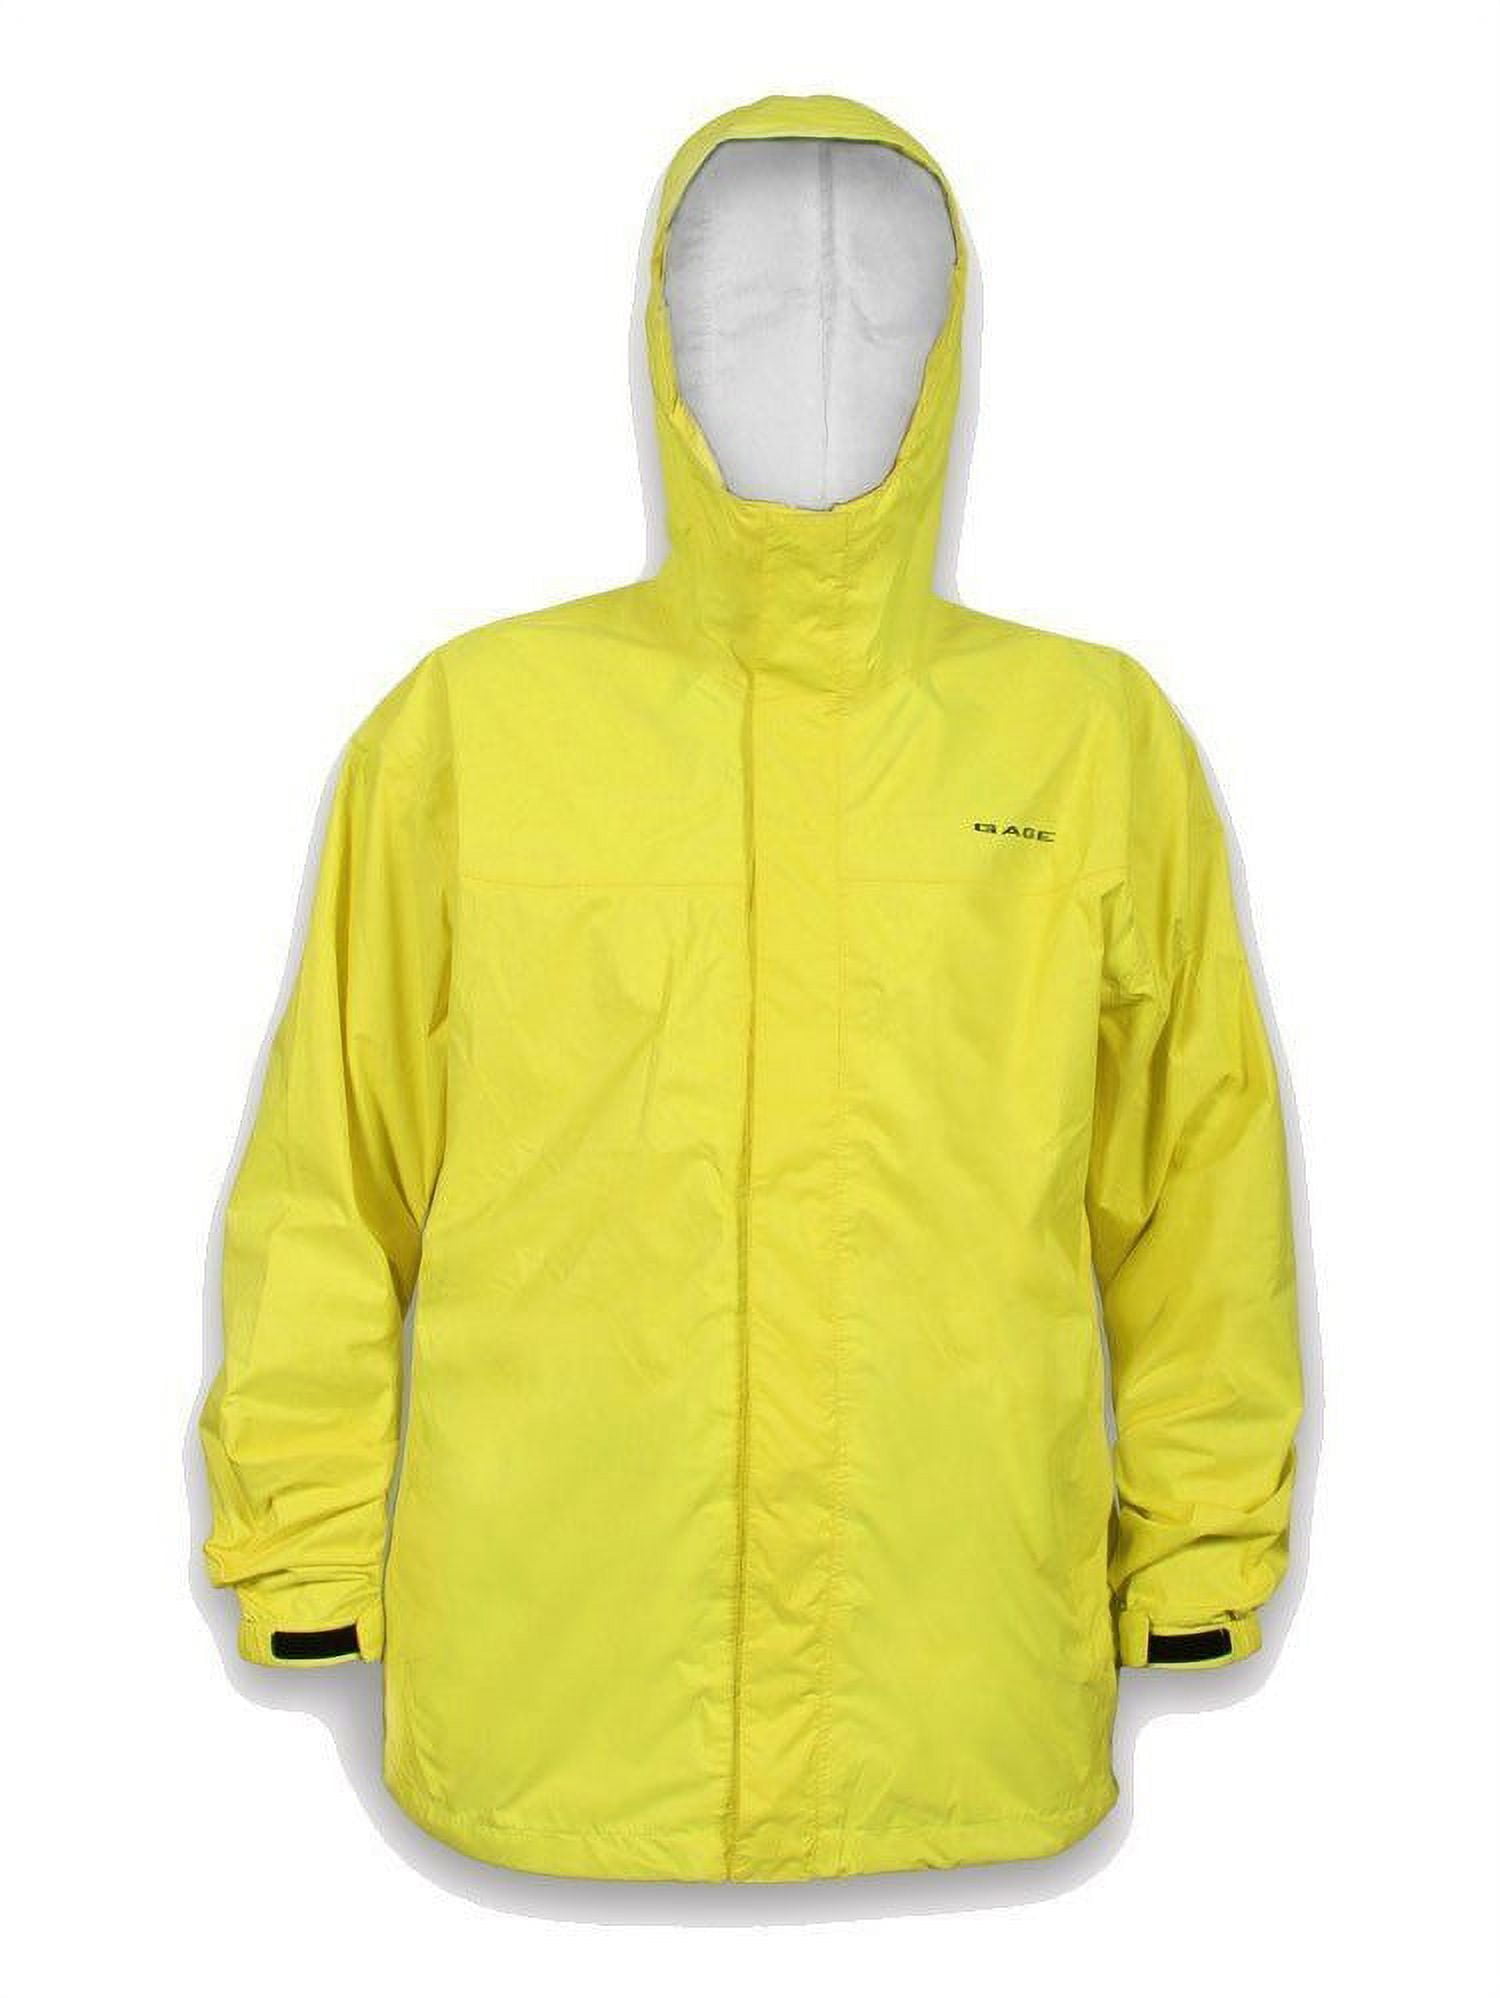 Grundens Gage Storm Runner Waterproof Fishing Jacket - Hi Vis Yellow